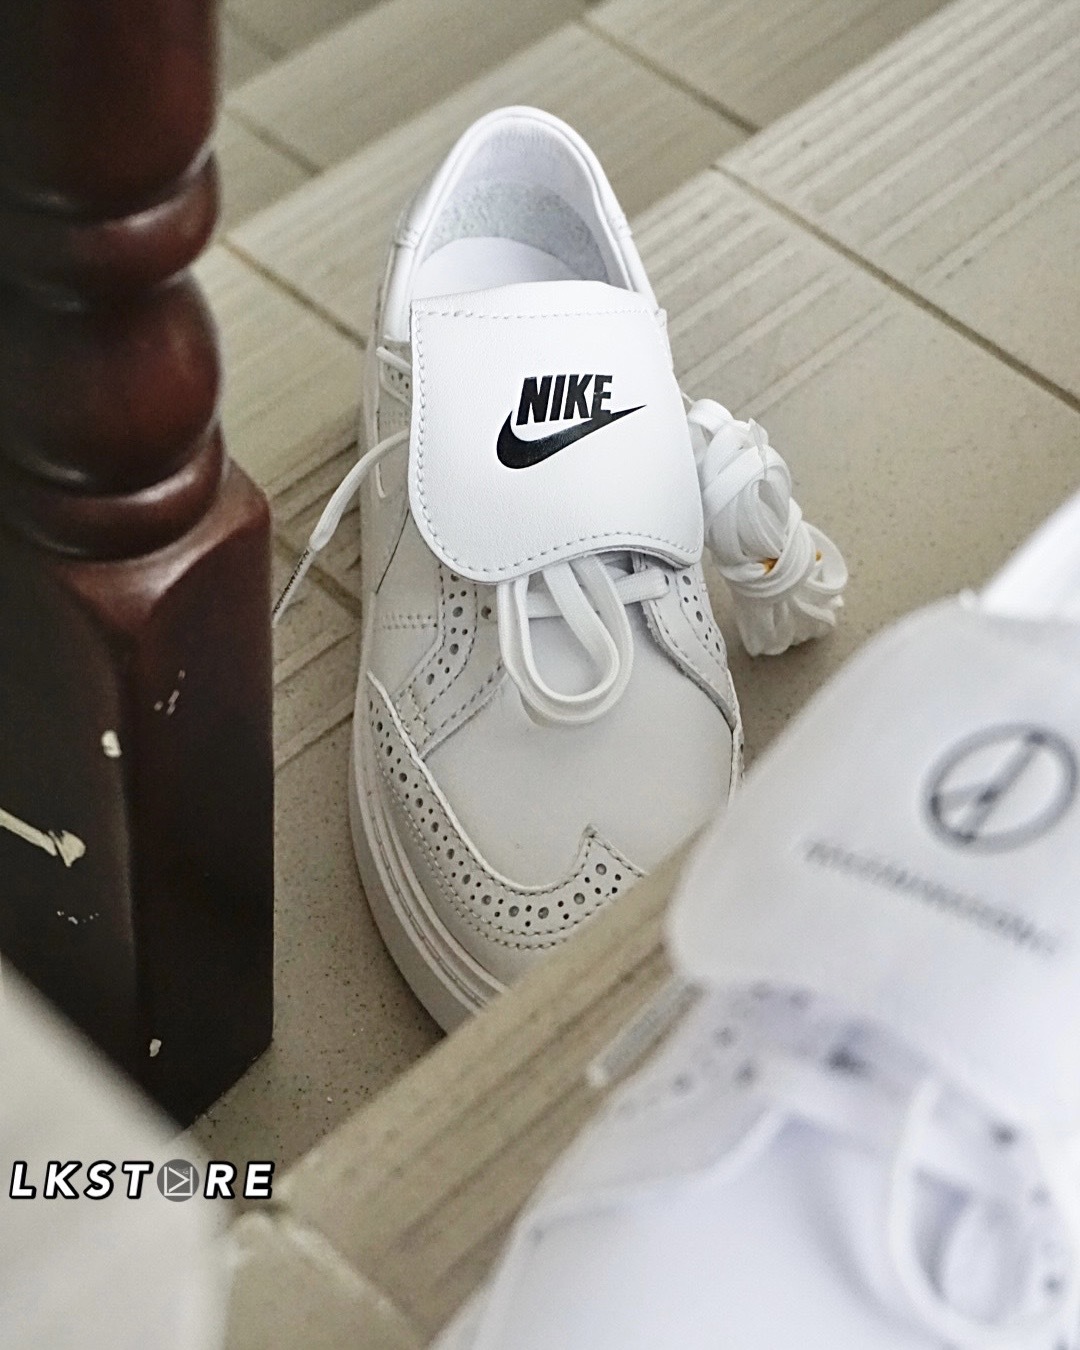 Nike KWONDO 1 X PEACEMINUSONE 小菊花 GD G-DRAGON 白色 DH2482-100 小白鞋 聯名 雛菊